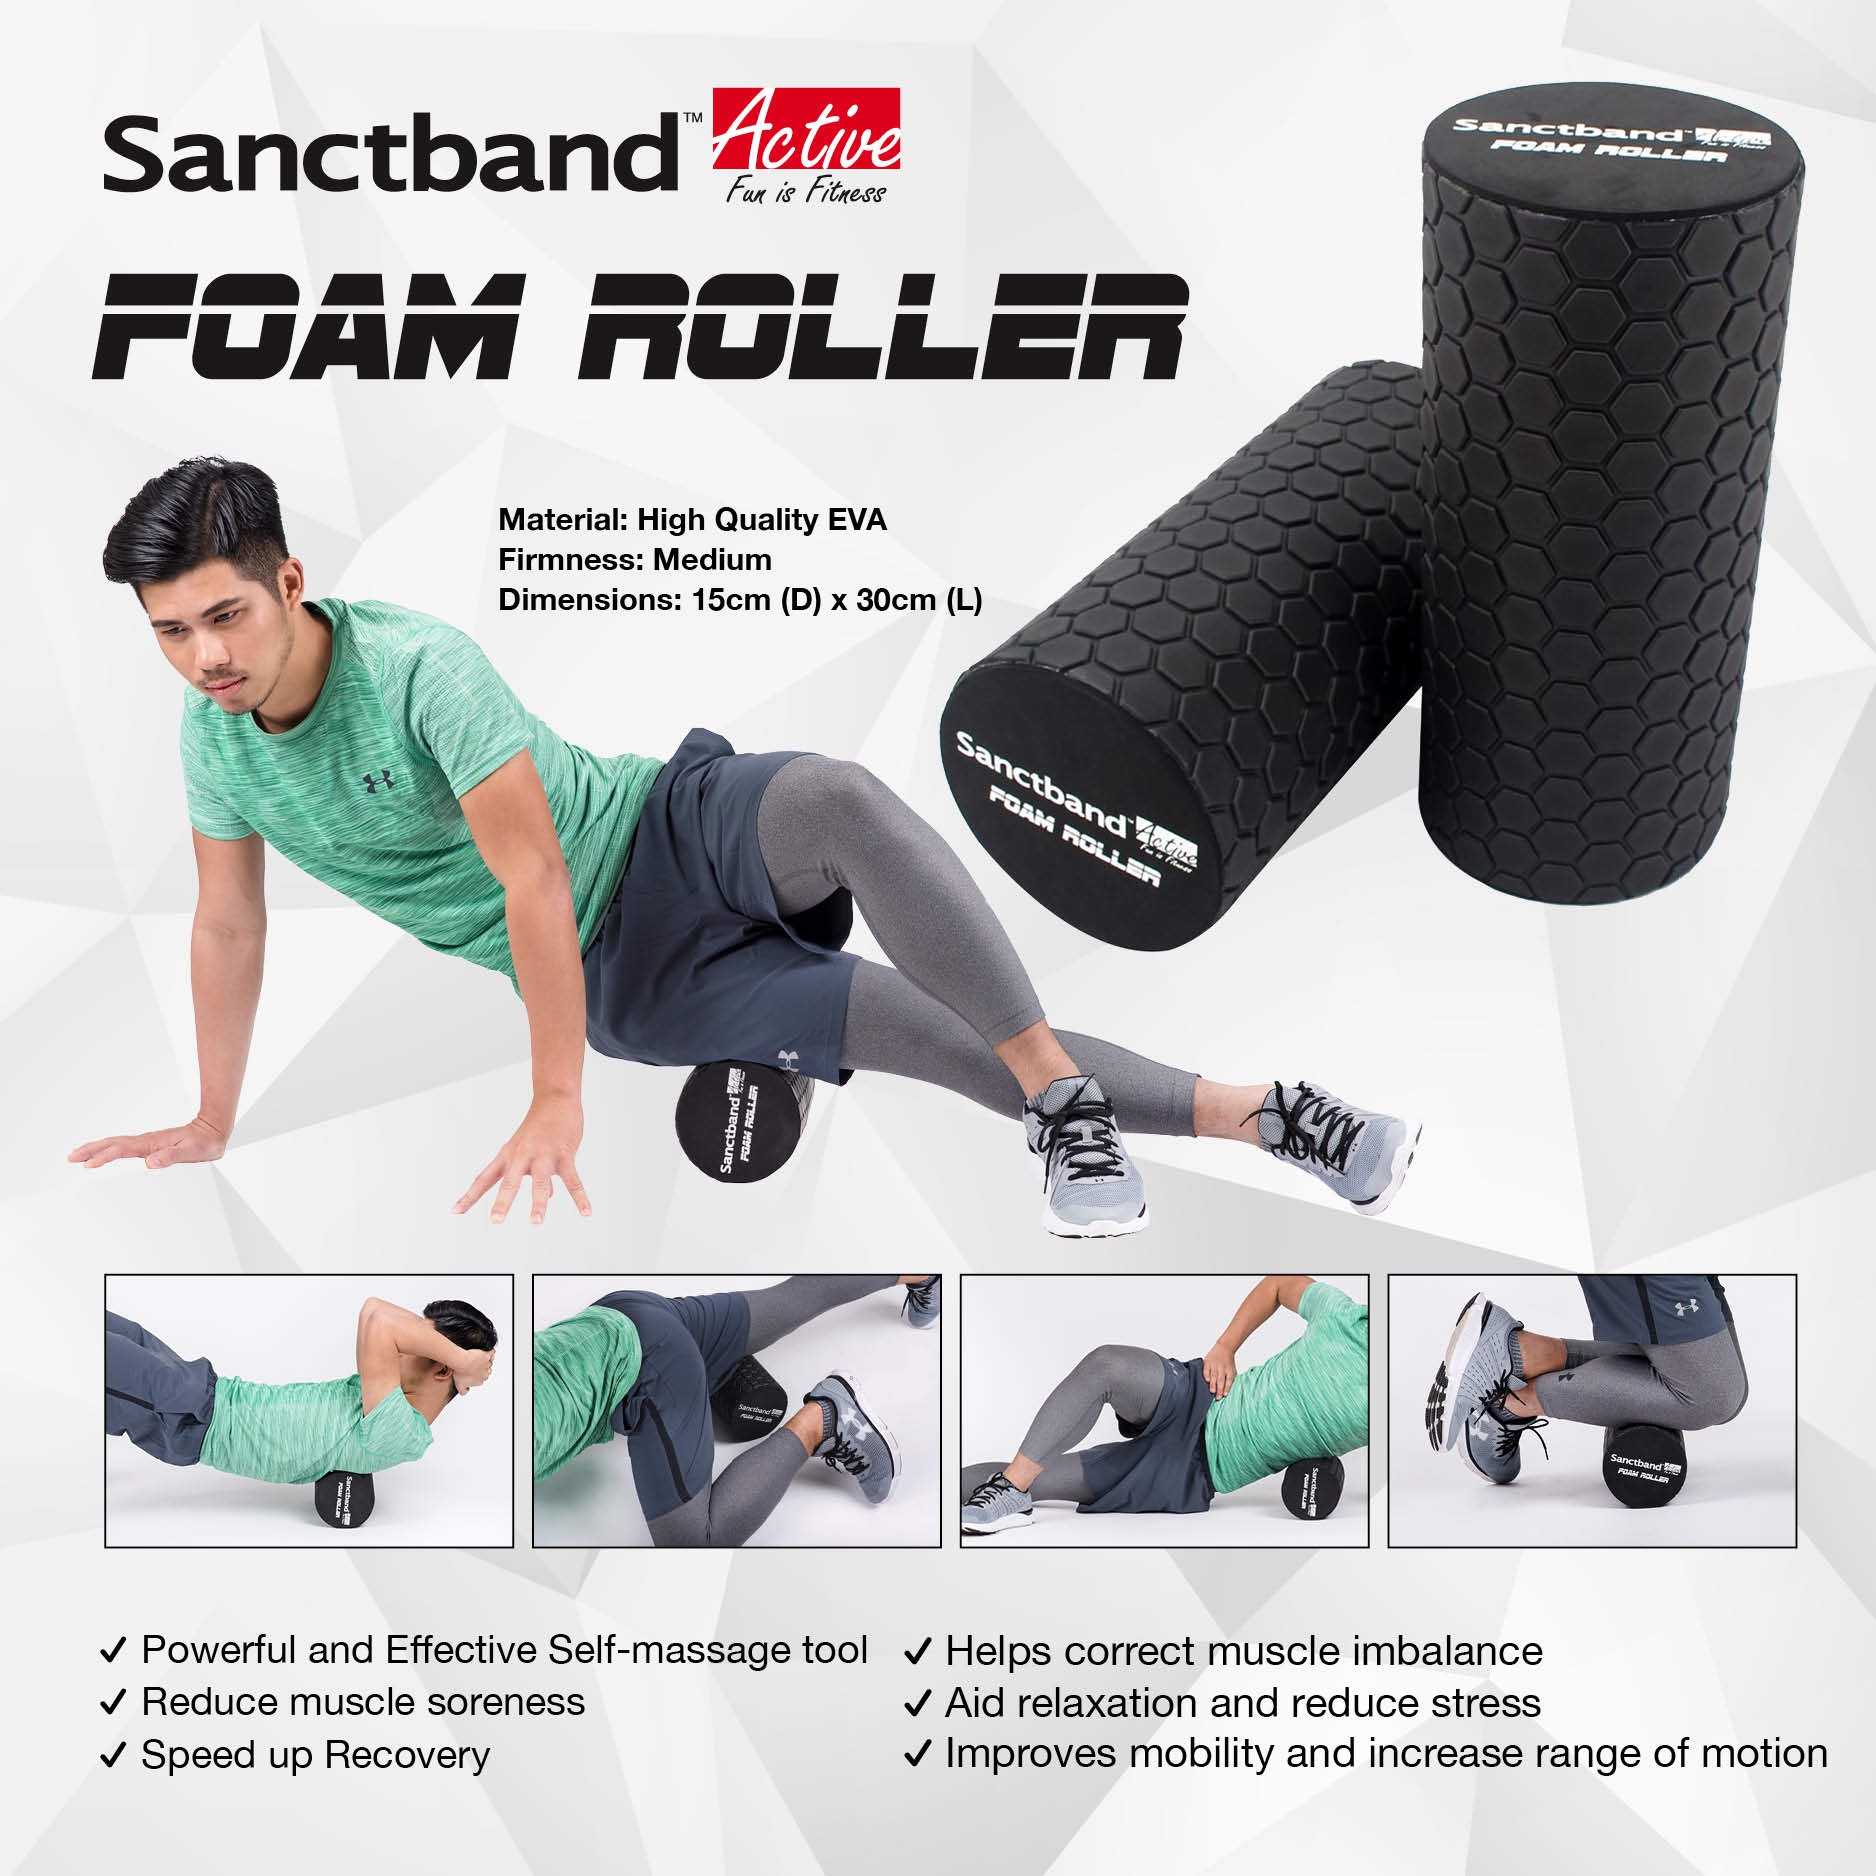 Sanctband Foam Roller